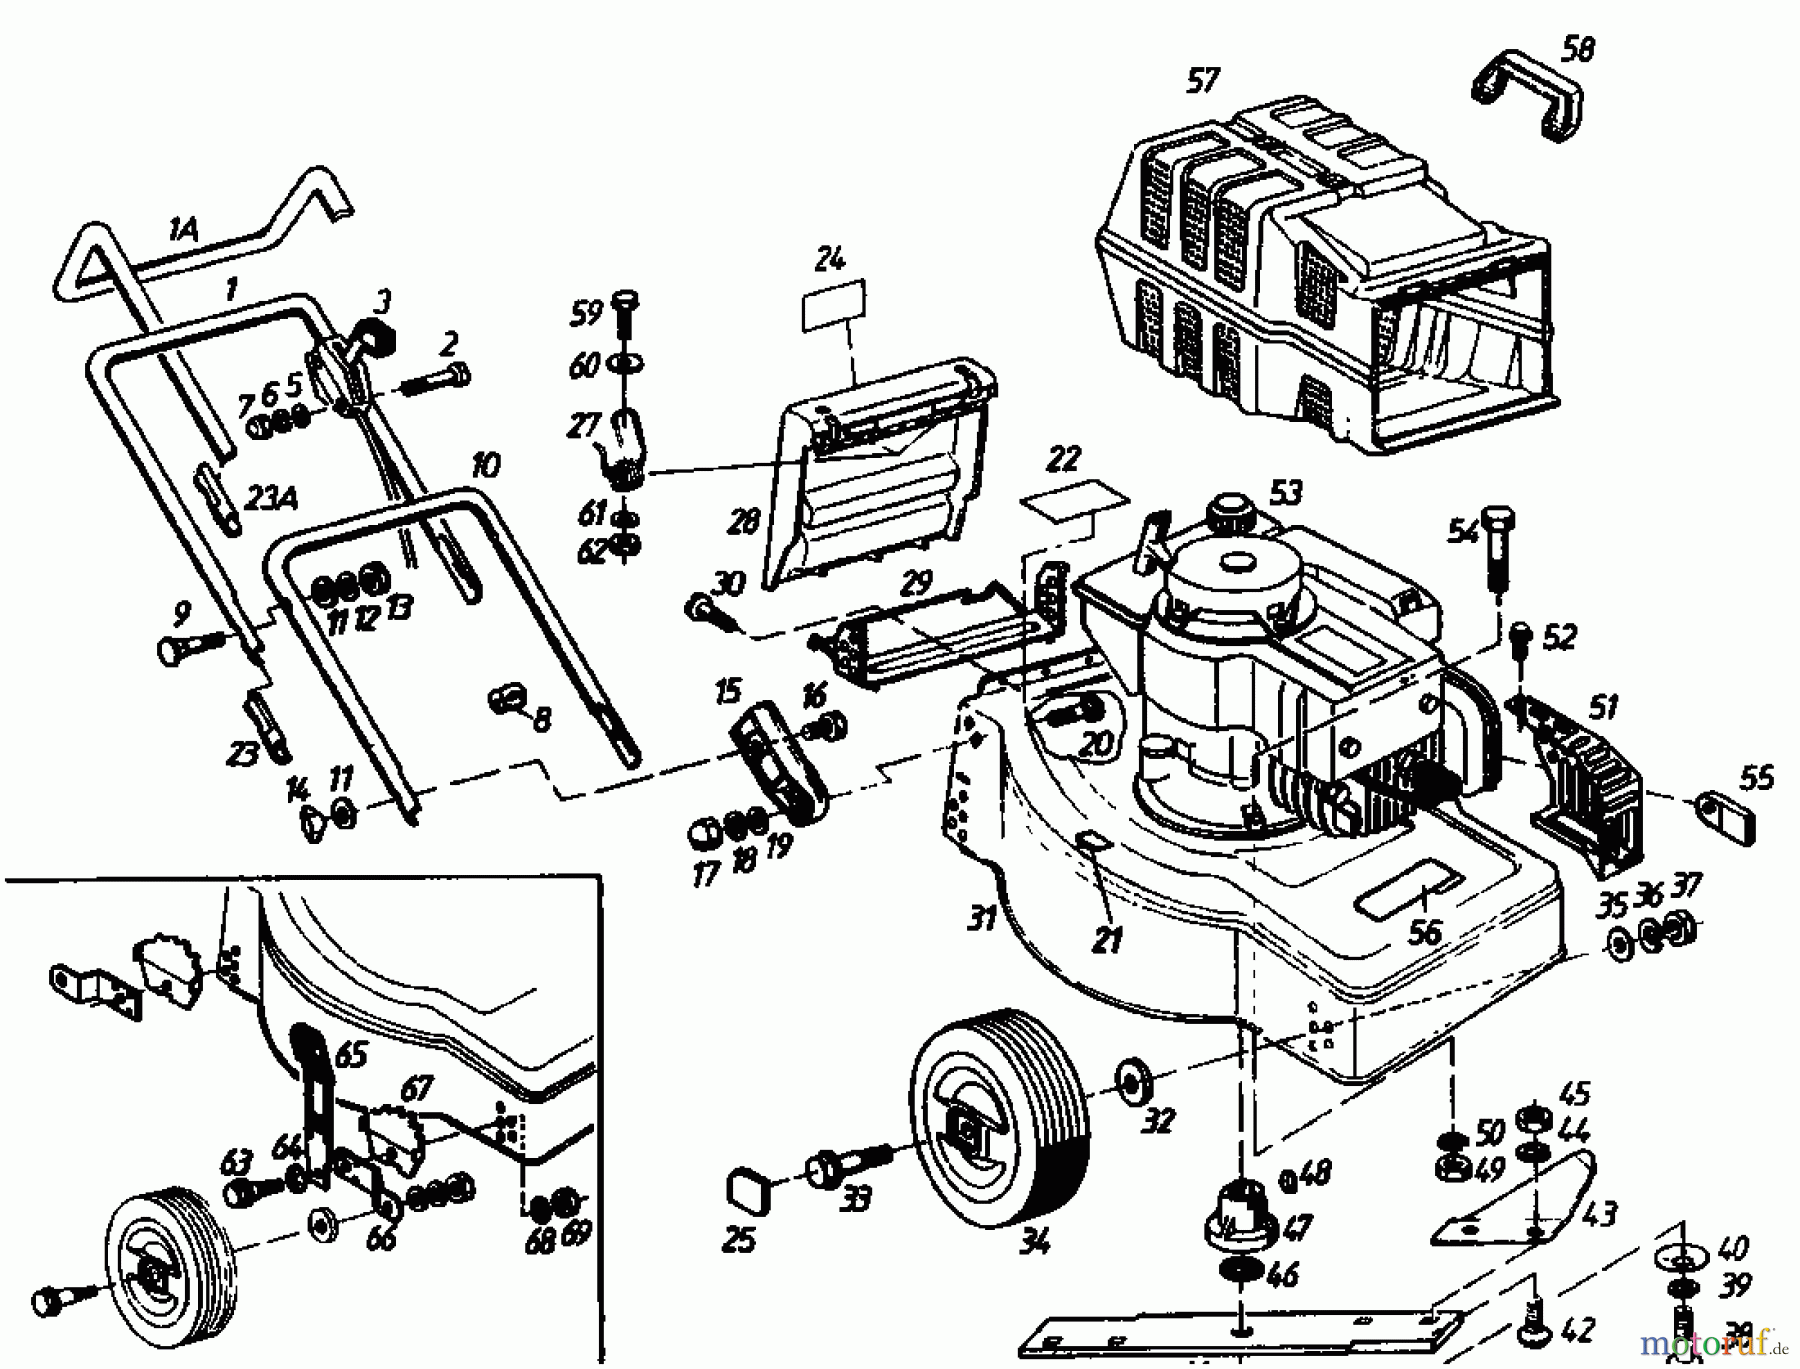  Golf Electric mower E 02881.01  (1985) Basic machine